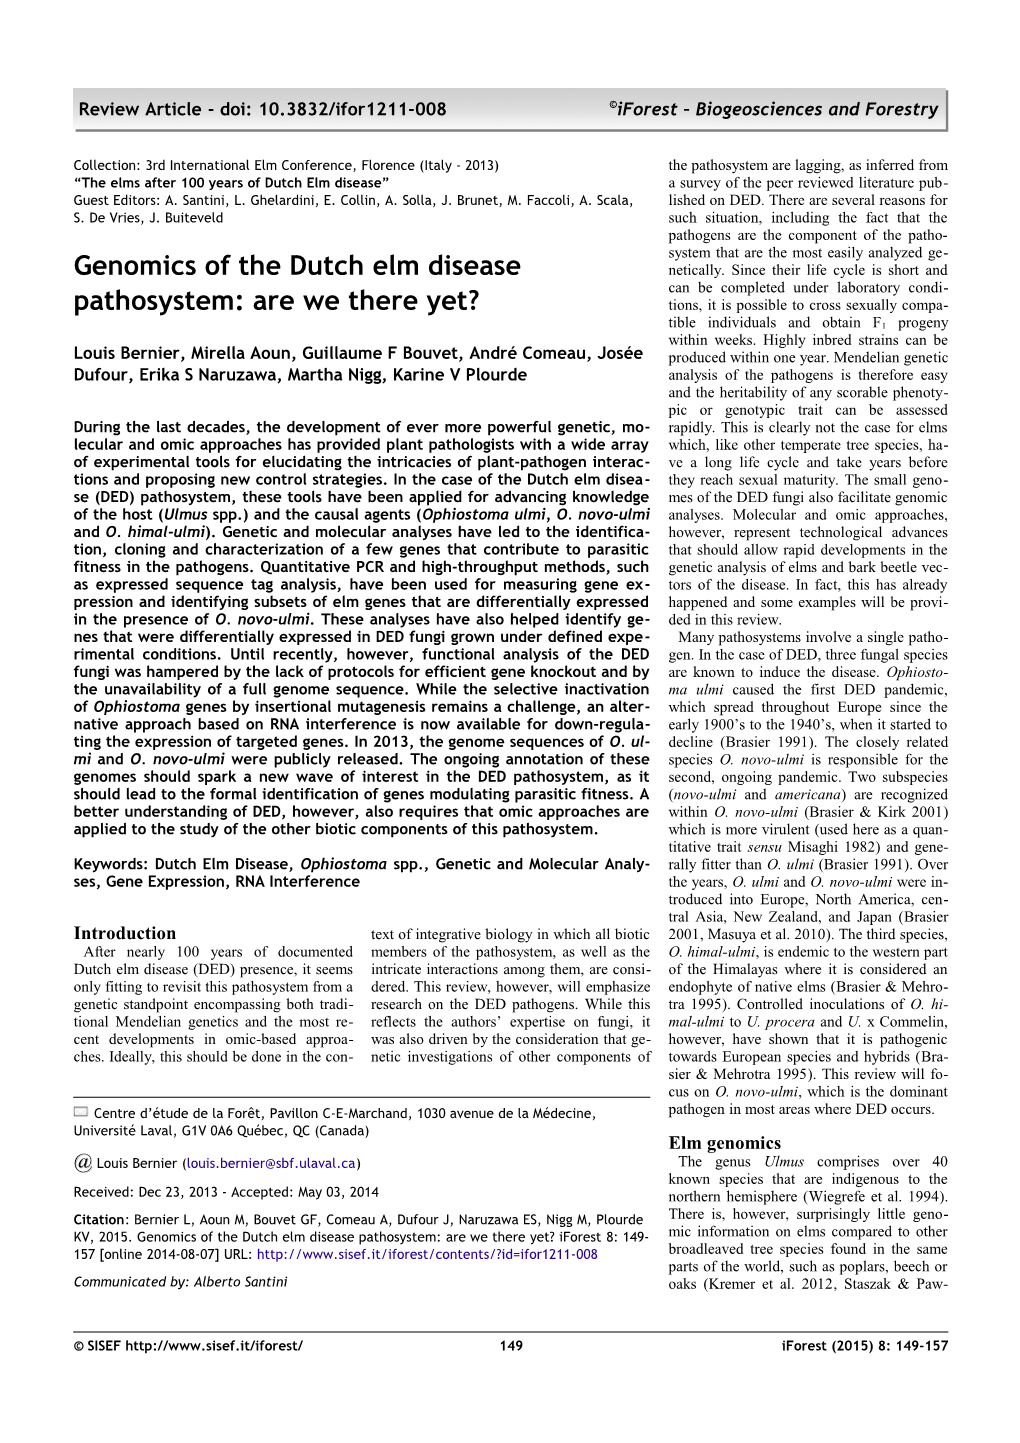 Genomics of the Dutch Elm Disease Pathosystem